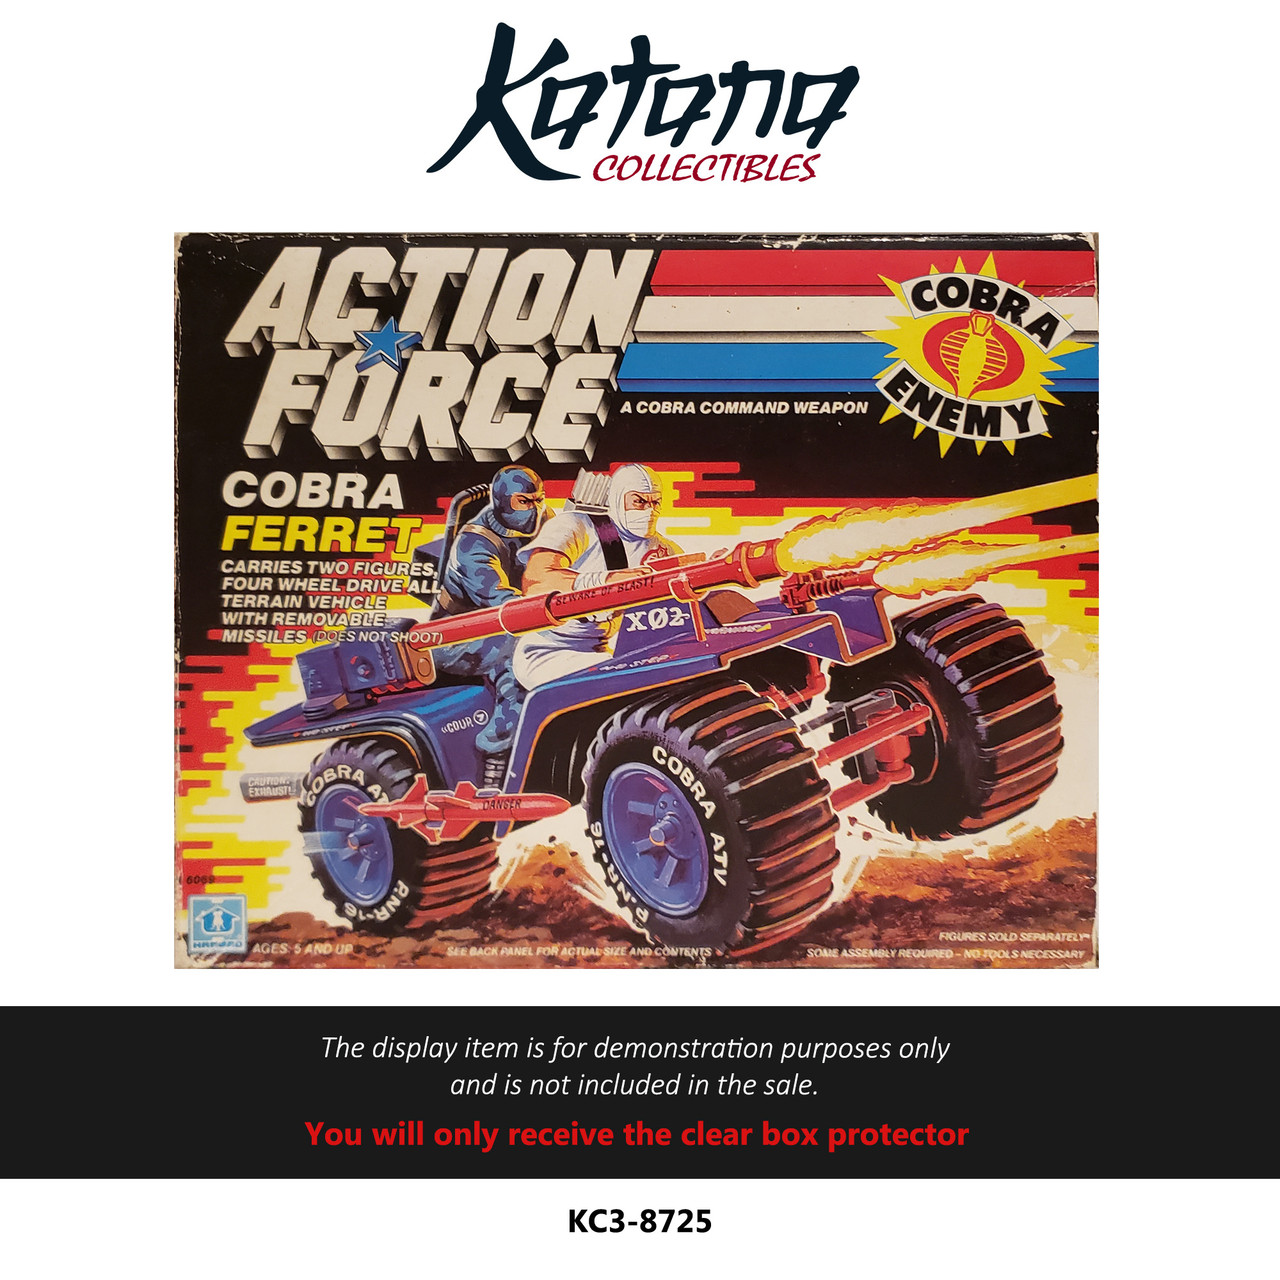 Katana Collectibles Protector For G.I. Joe Action Force Cobra Ferret 1986 European